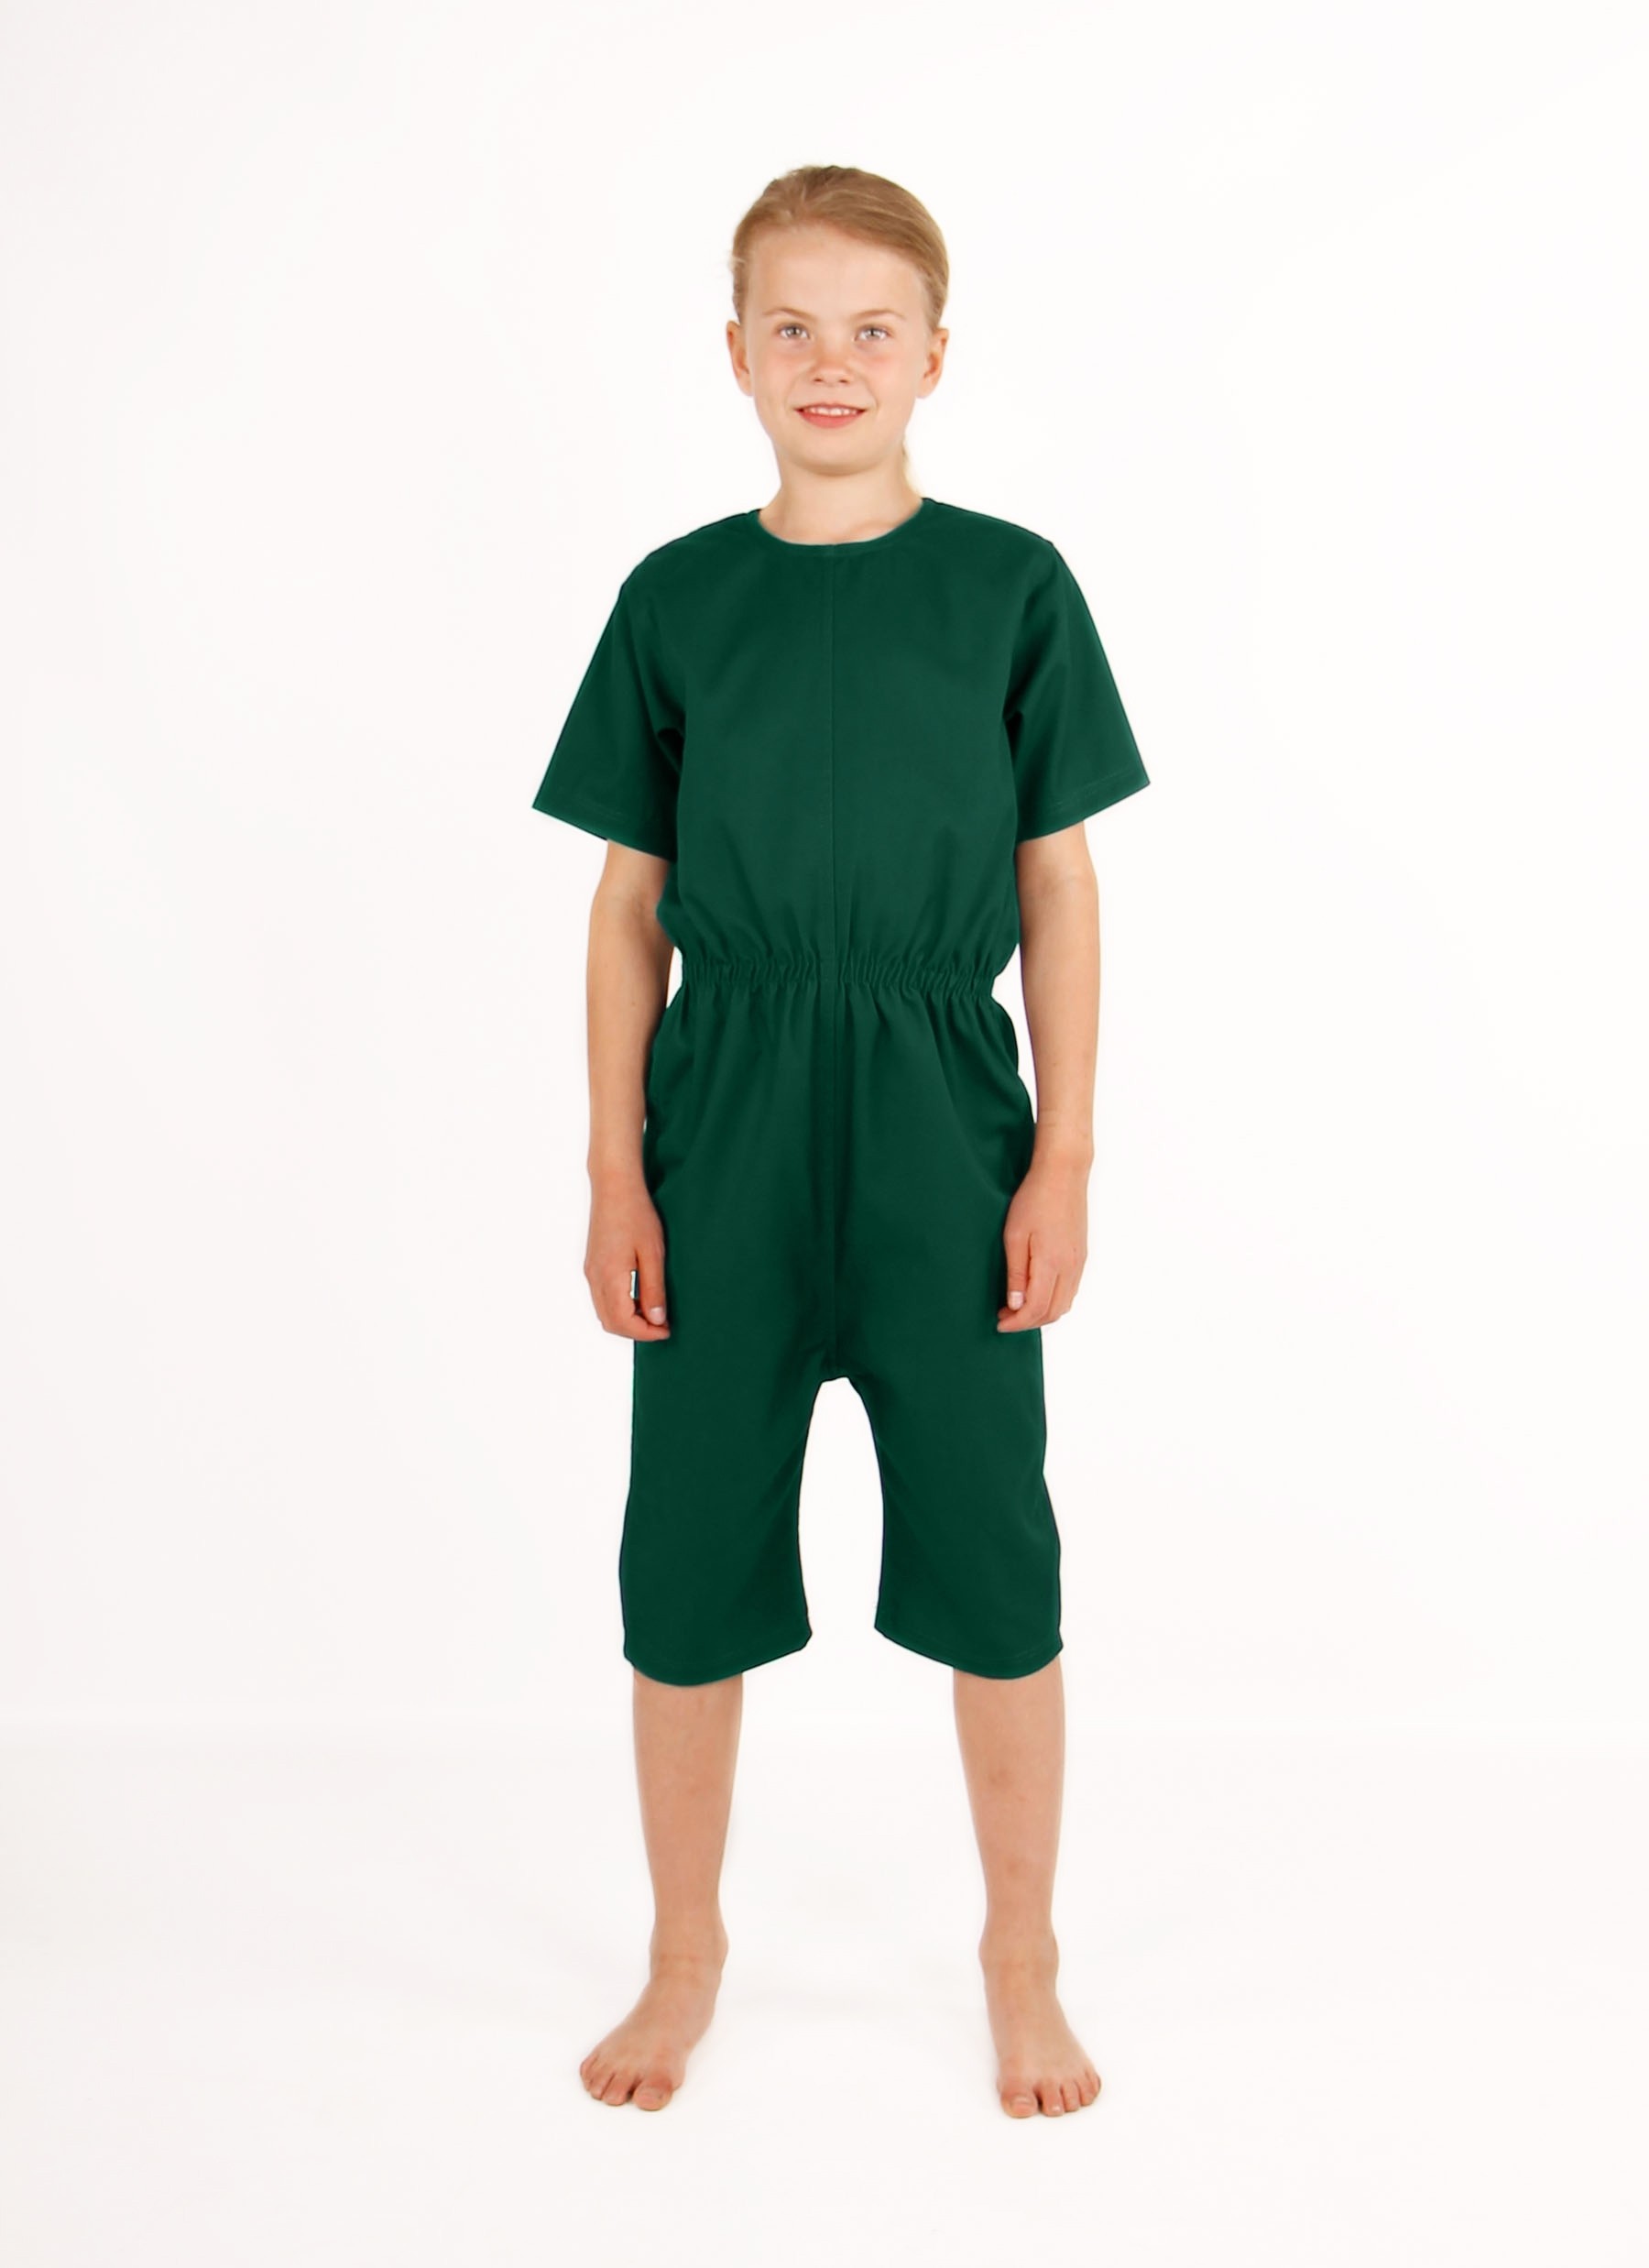 Children Anti strip bodysuit - Special needs clothing